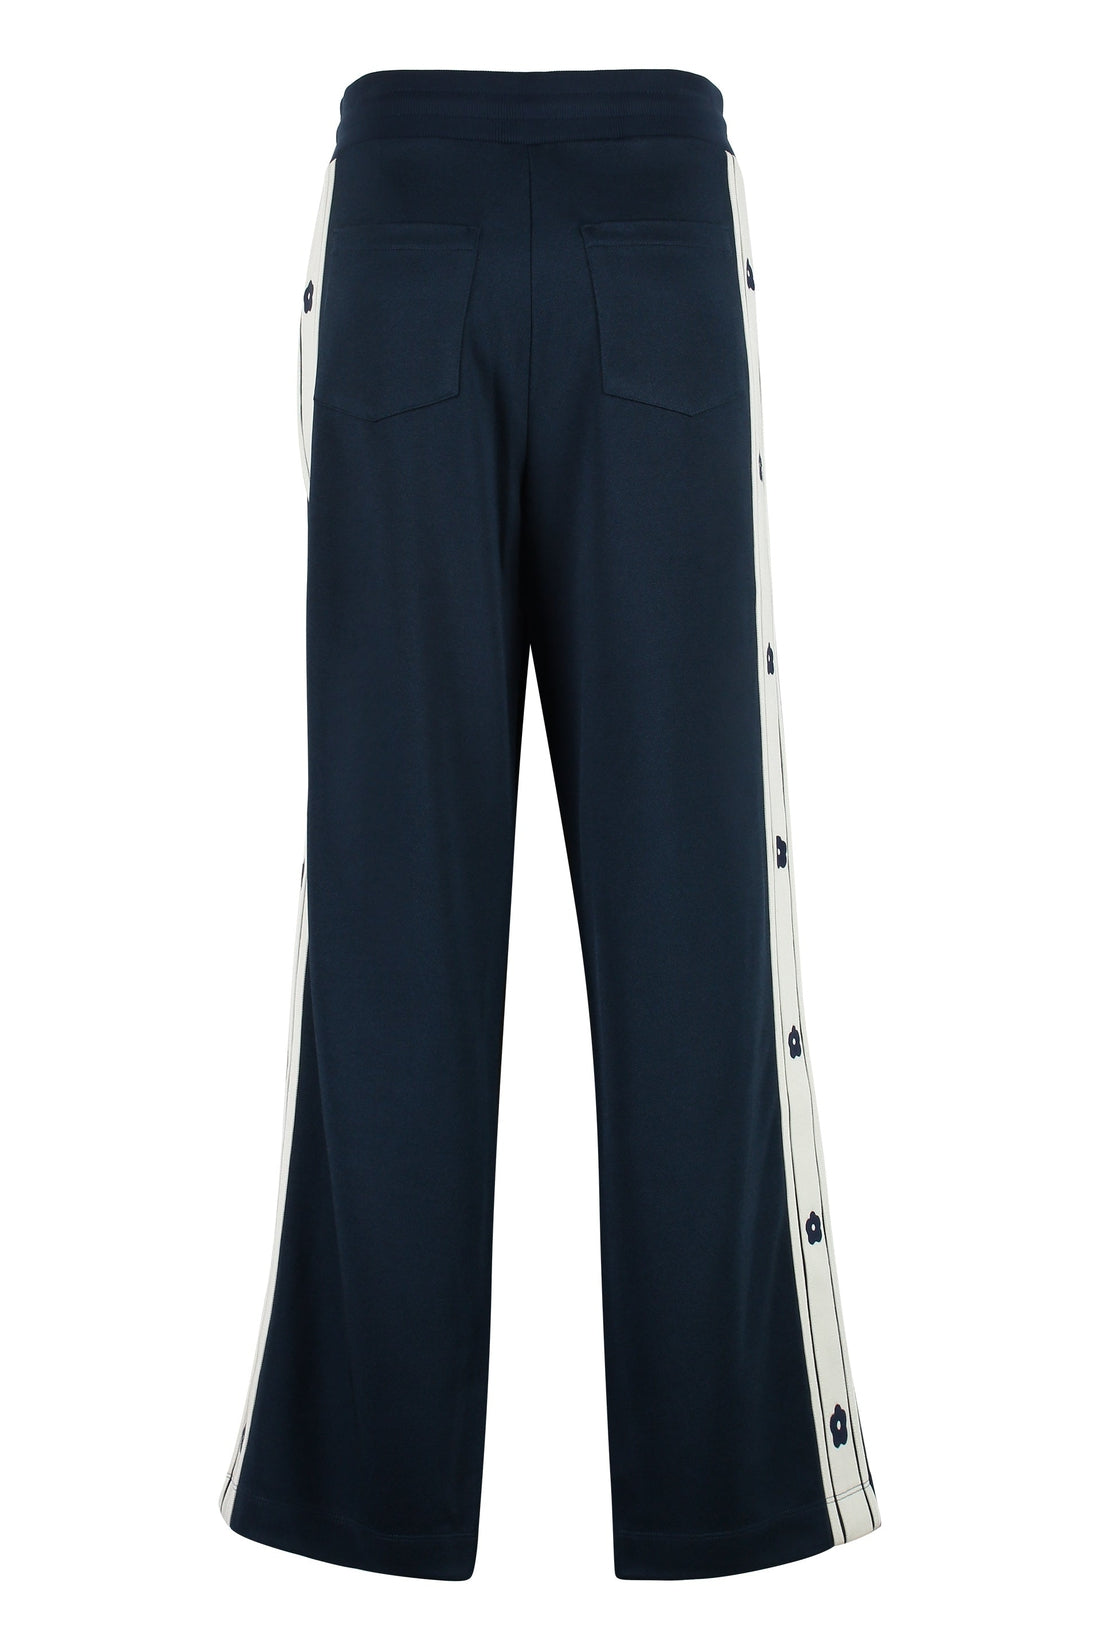 Kenzo-OUTLET-SALE-Track-pants with decorative stripes-ARCHIVIST